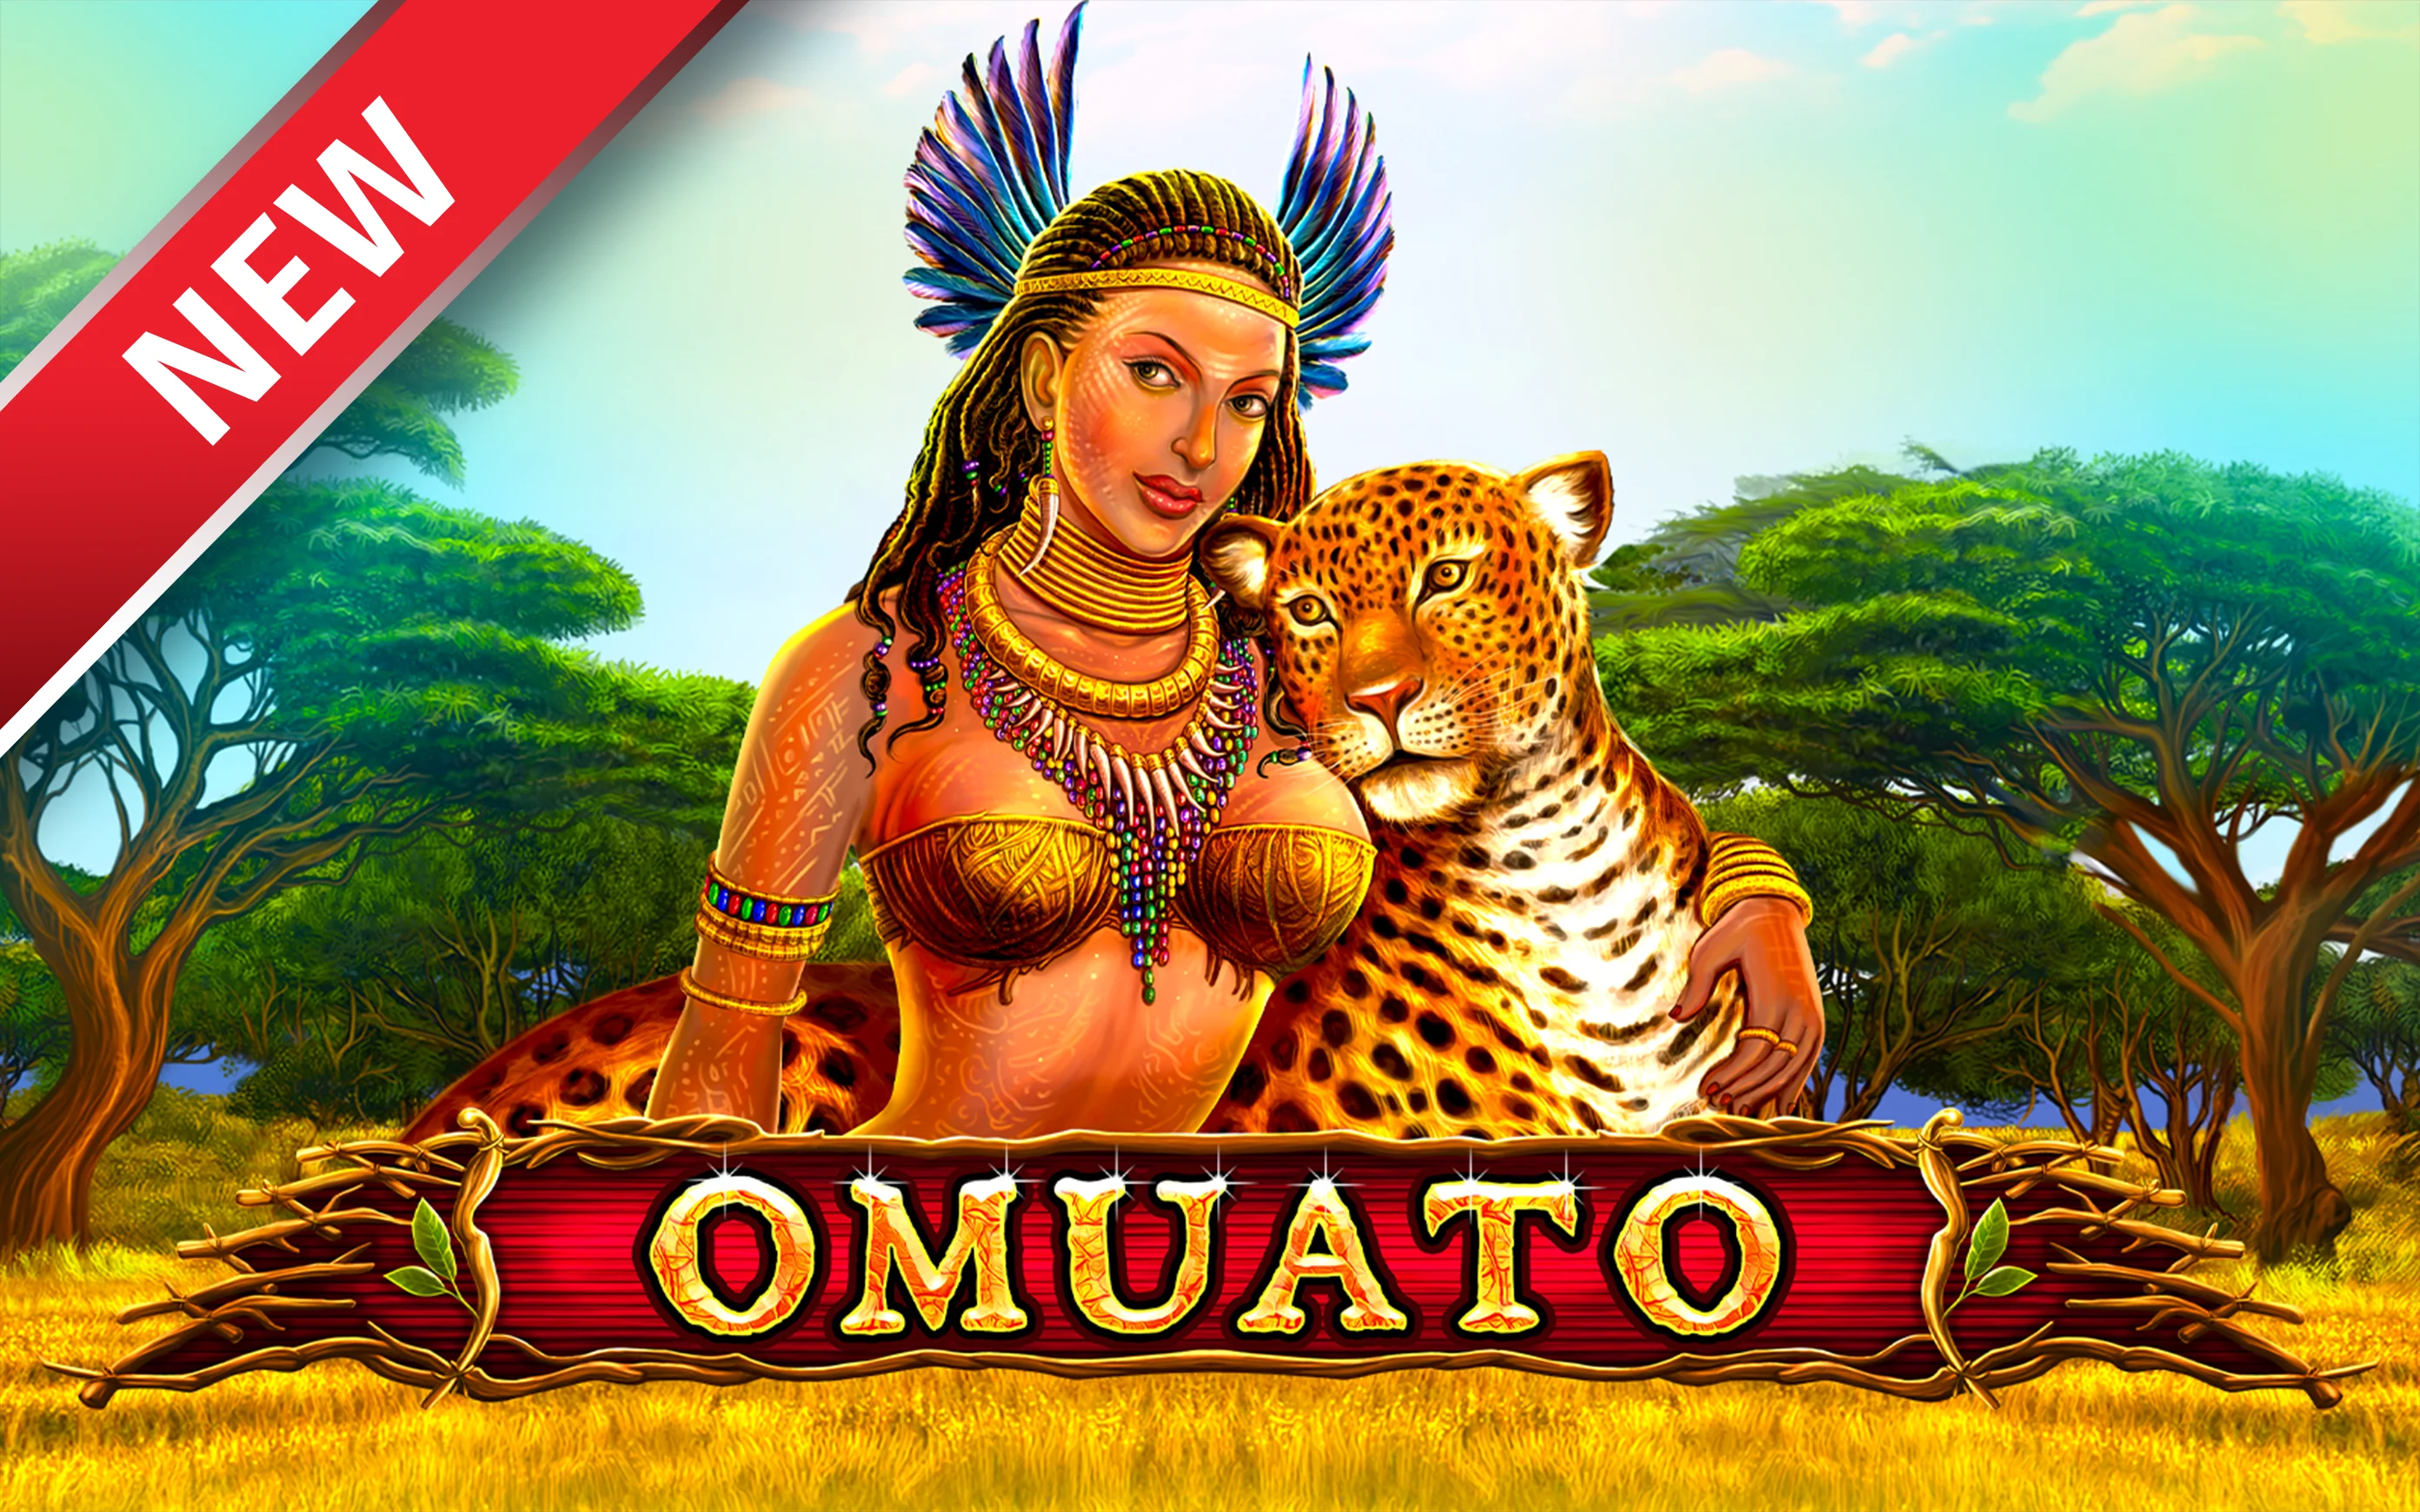 Грайте у Omuato в онлайн-казино Starcasino.be